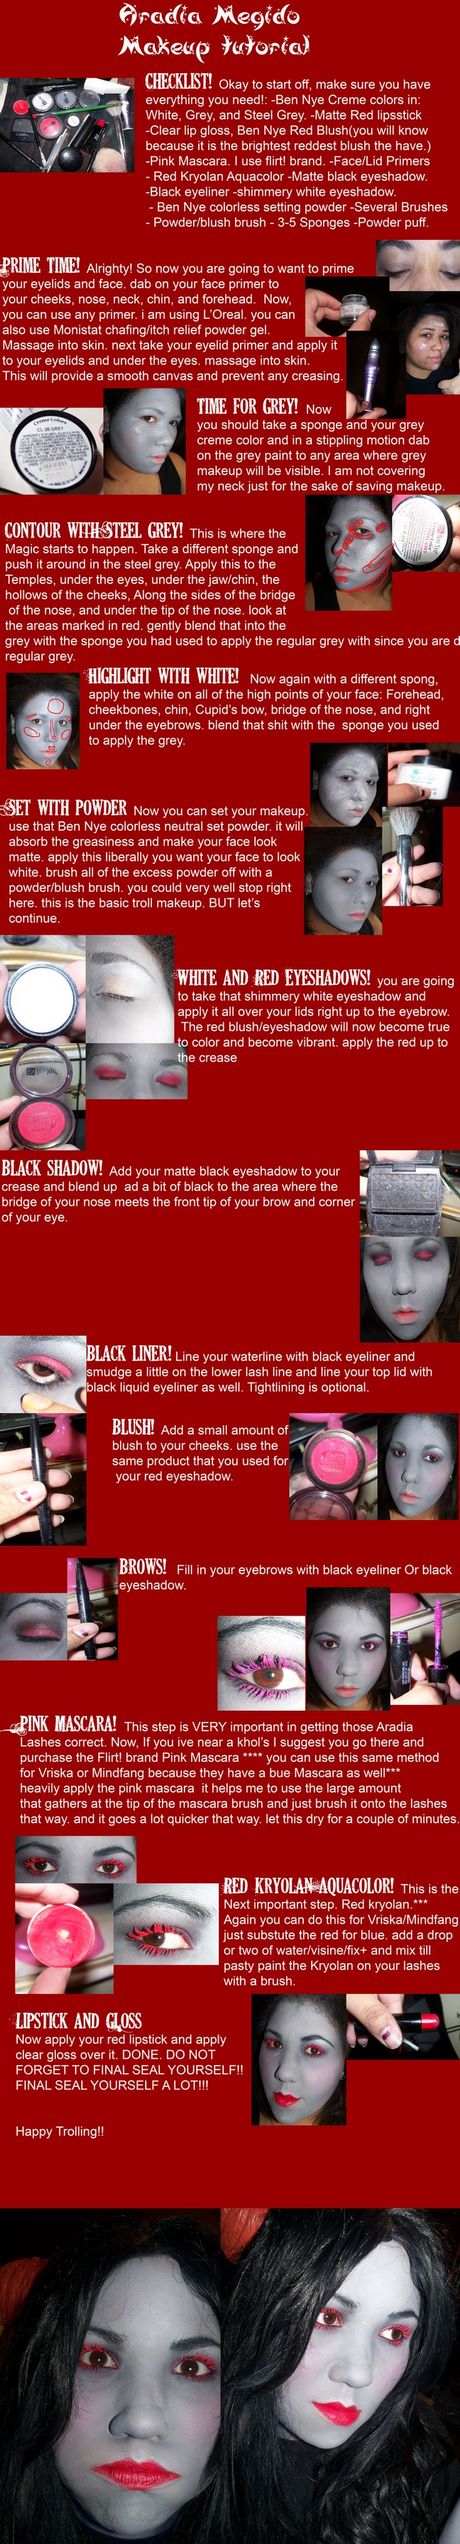 aradia-megido-makeup-tutorial-68_7 Aradia megido make-up tutorial